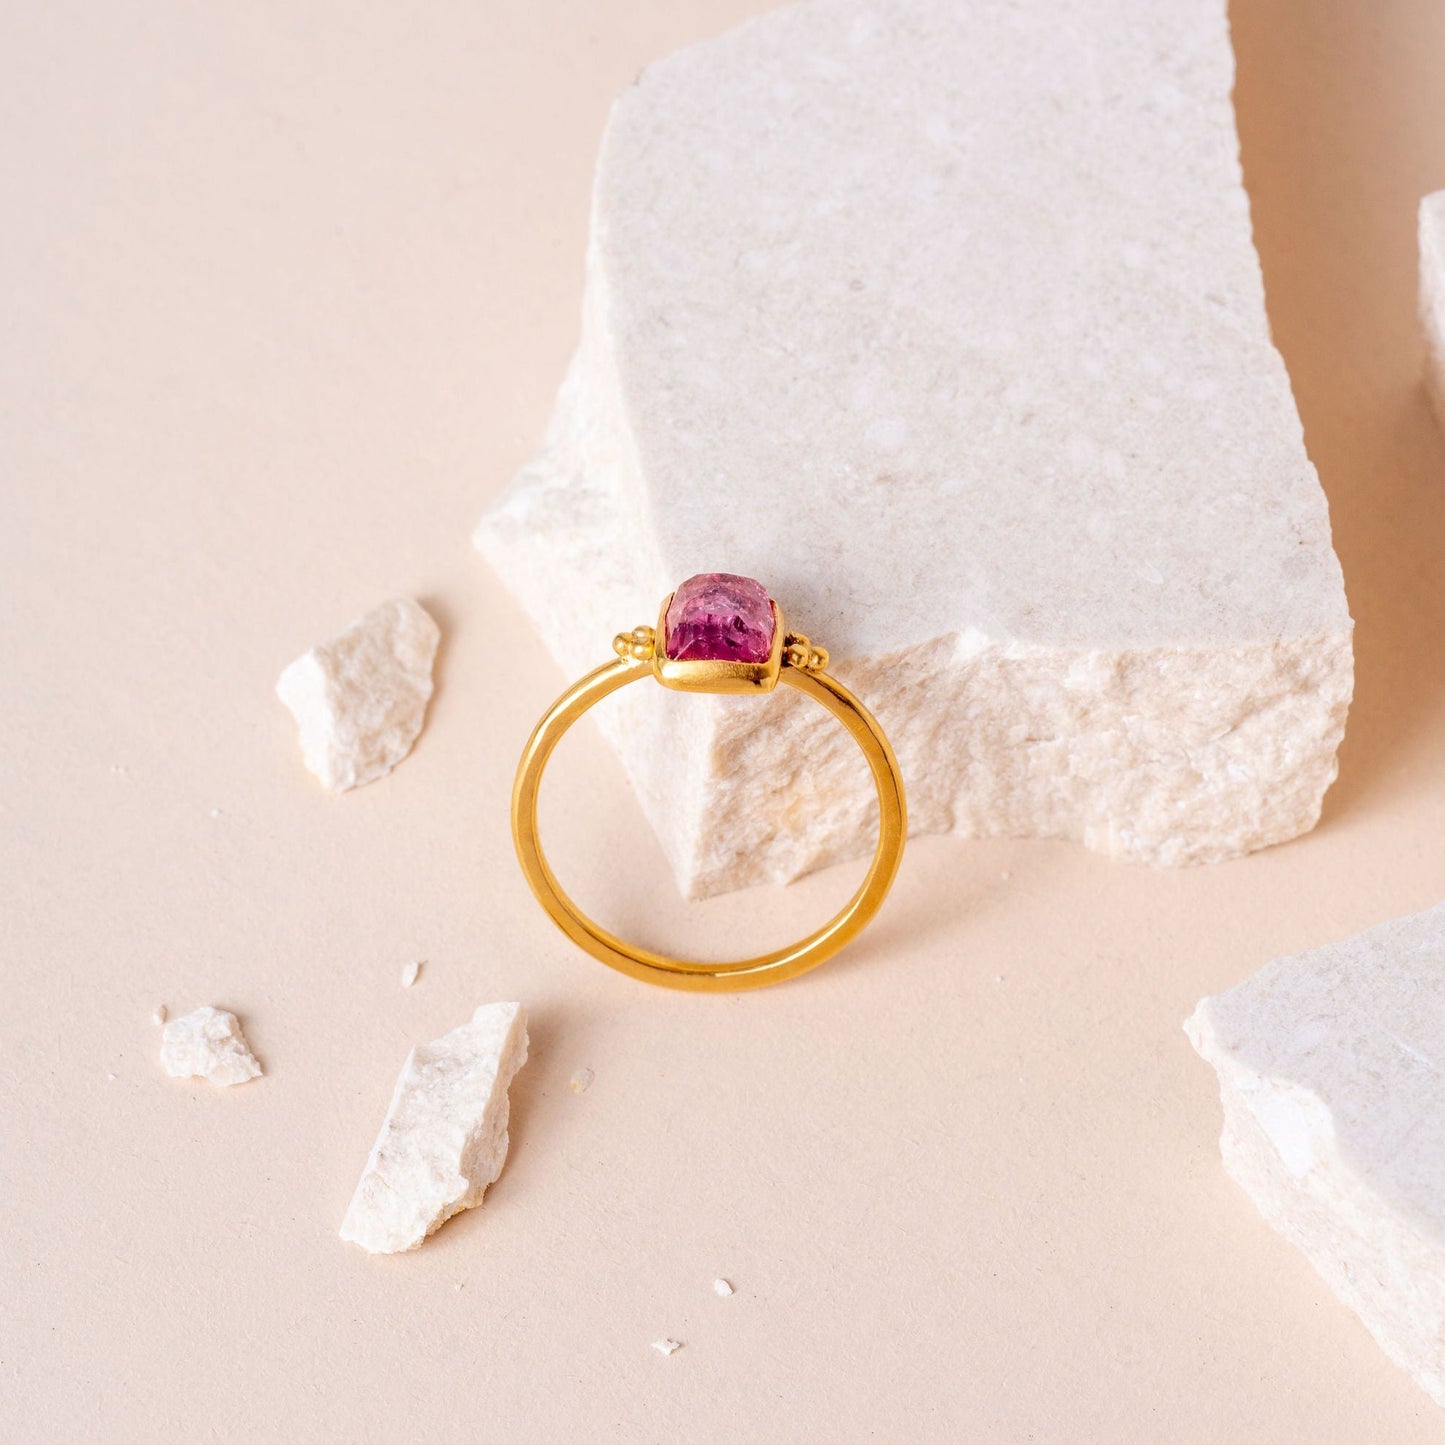 Artisan gold ring featuring granulation detailing surrounding a beautiful hand-cut pink tourmaline.